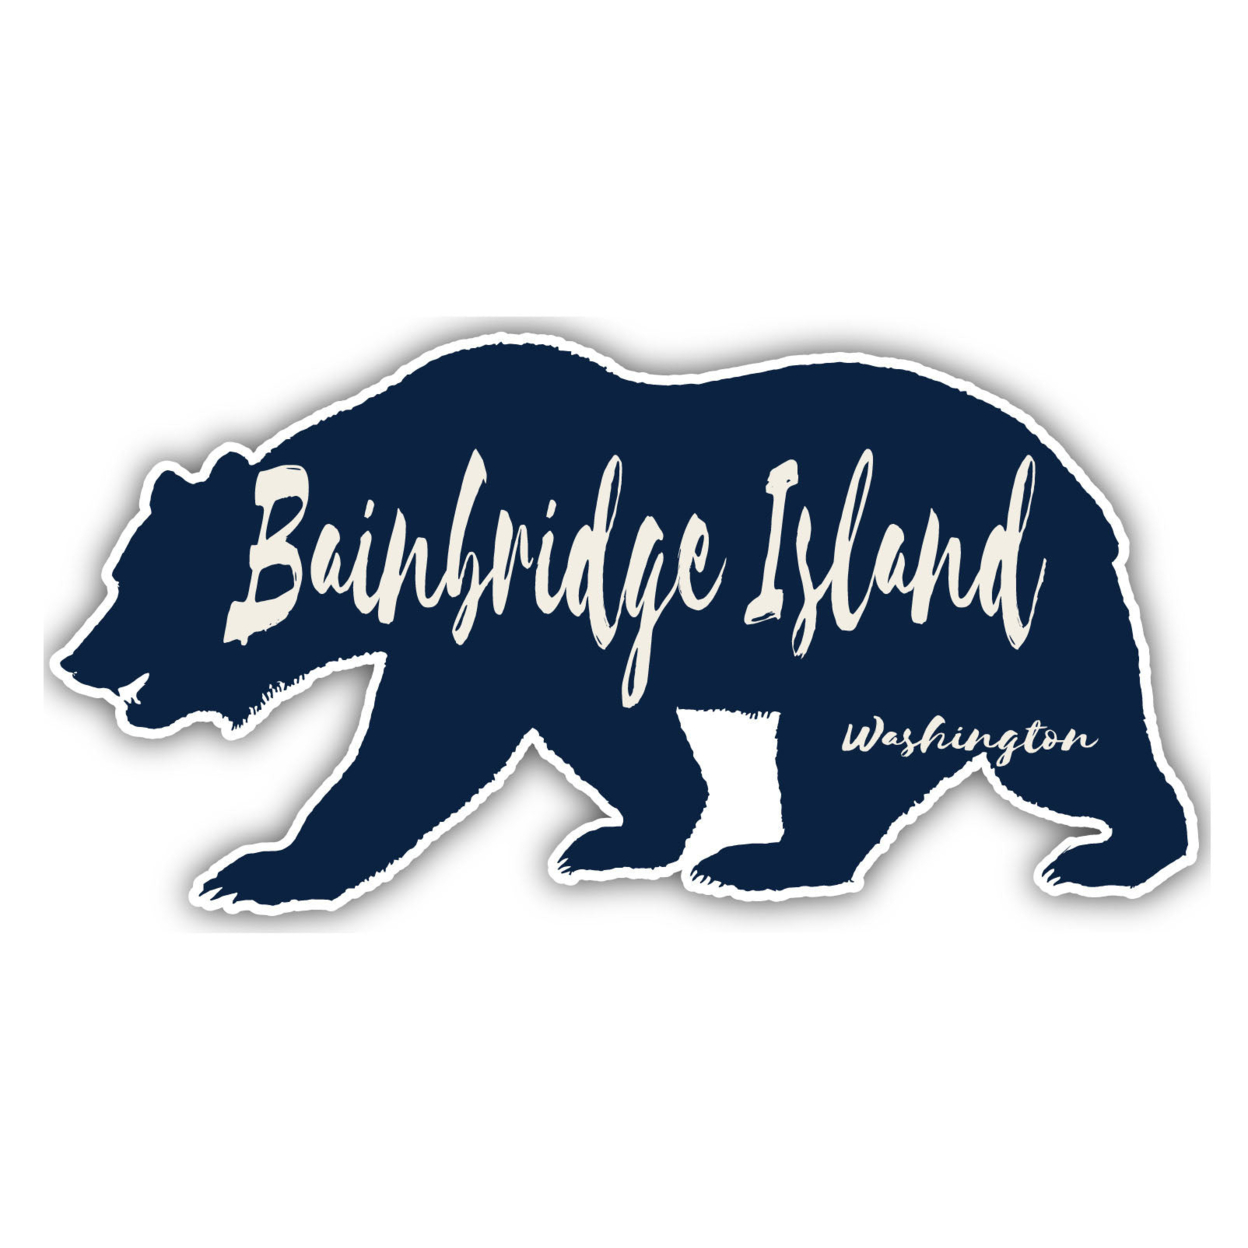 Bainbridge Island Washington Souvenir Decorative Stickers (Choose Theme And Size) - 4-Pack, 8-Inch, Adventures Awaits